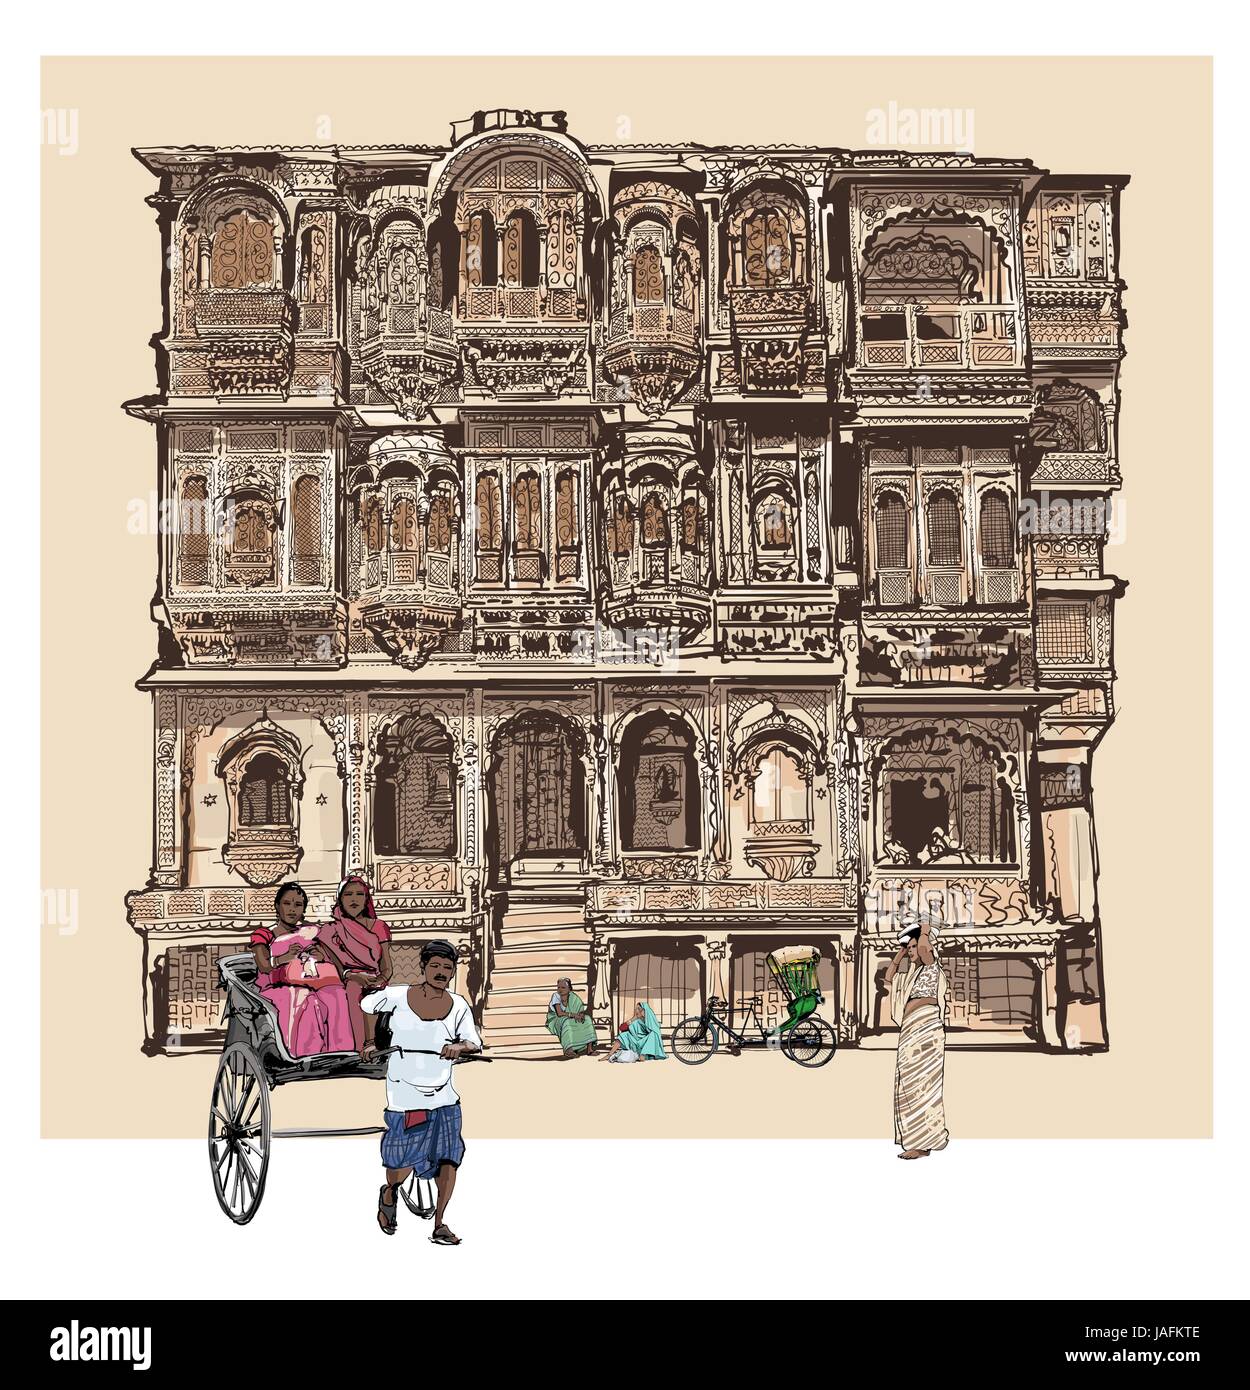 Fassade des alten Hauses mit Balkon in Jodhpur, Indien - Vektor-illustration Stock Vektor